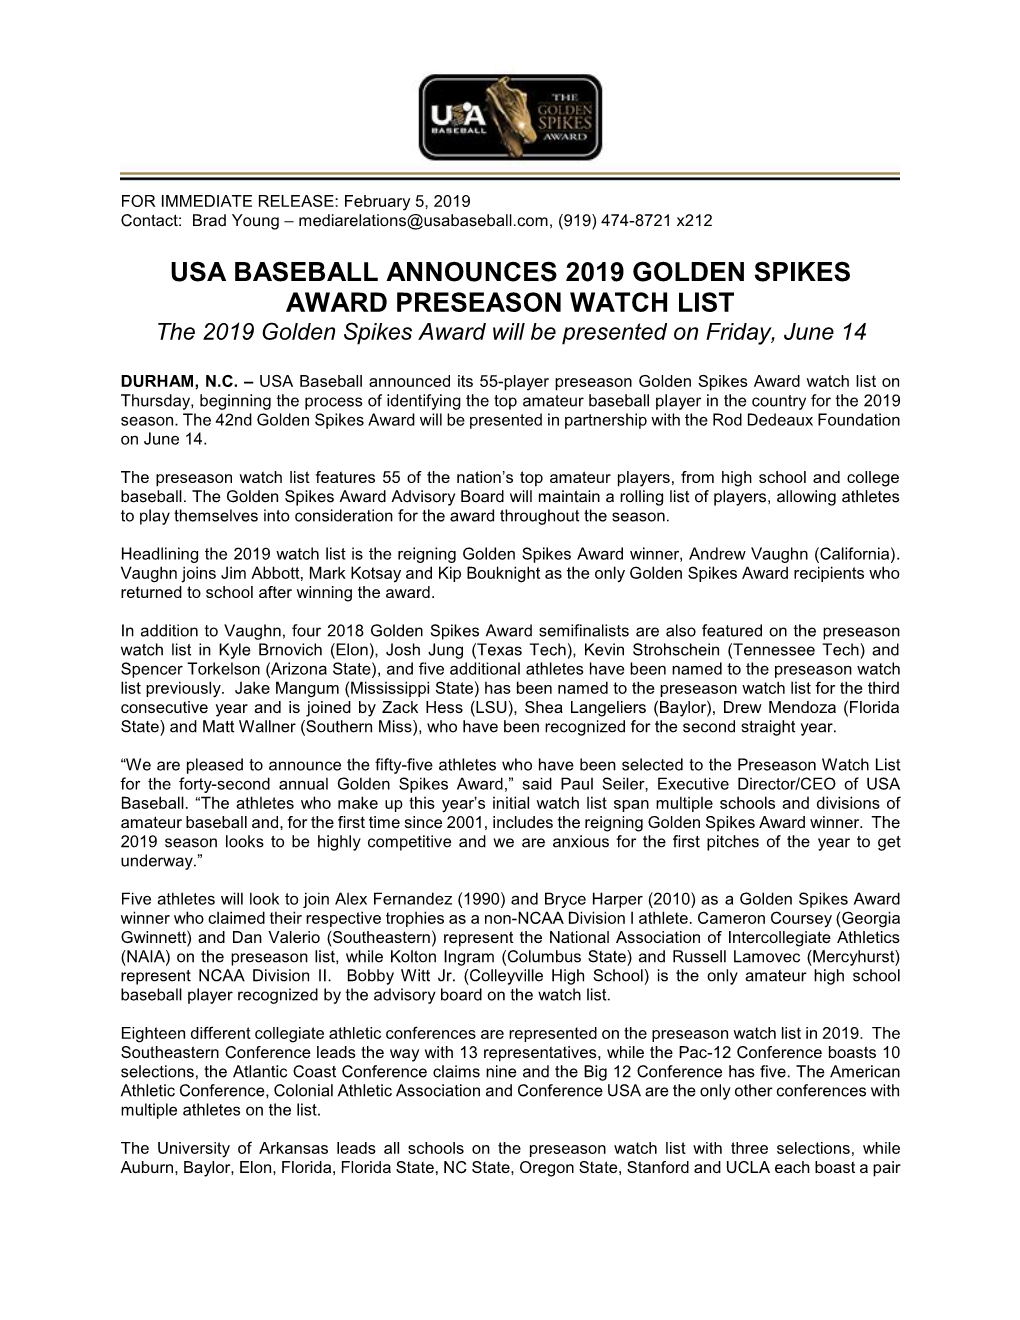 USA BASEBALL ANNOUNCES 2019 GOLDEN SPIKES AWARD PRESEASON WATCH LIST the 2019 Golden Spikes Award Will Be Presented on Friday, June 14